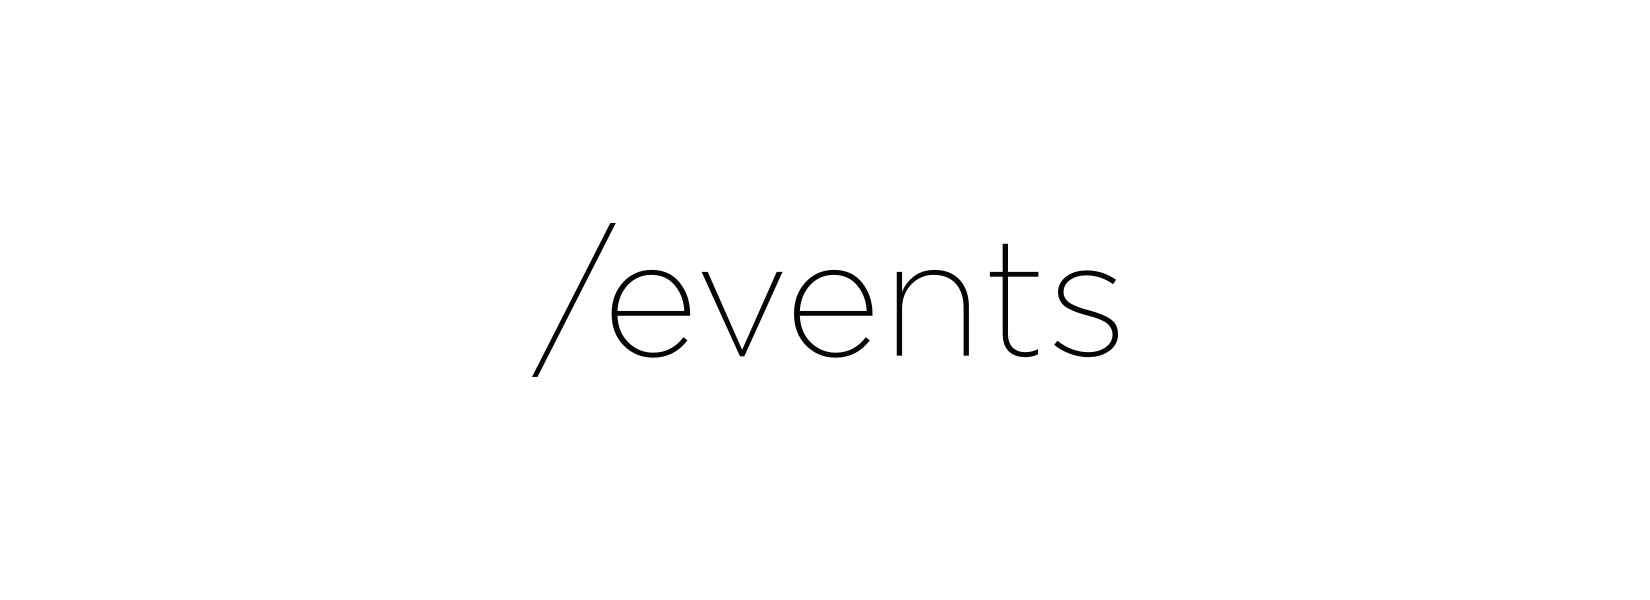 Announcing Skcript Events